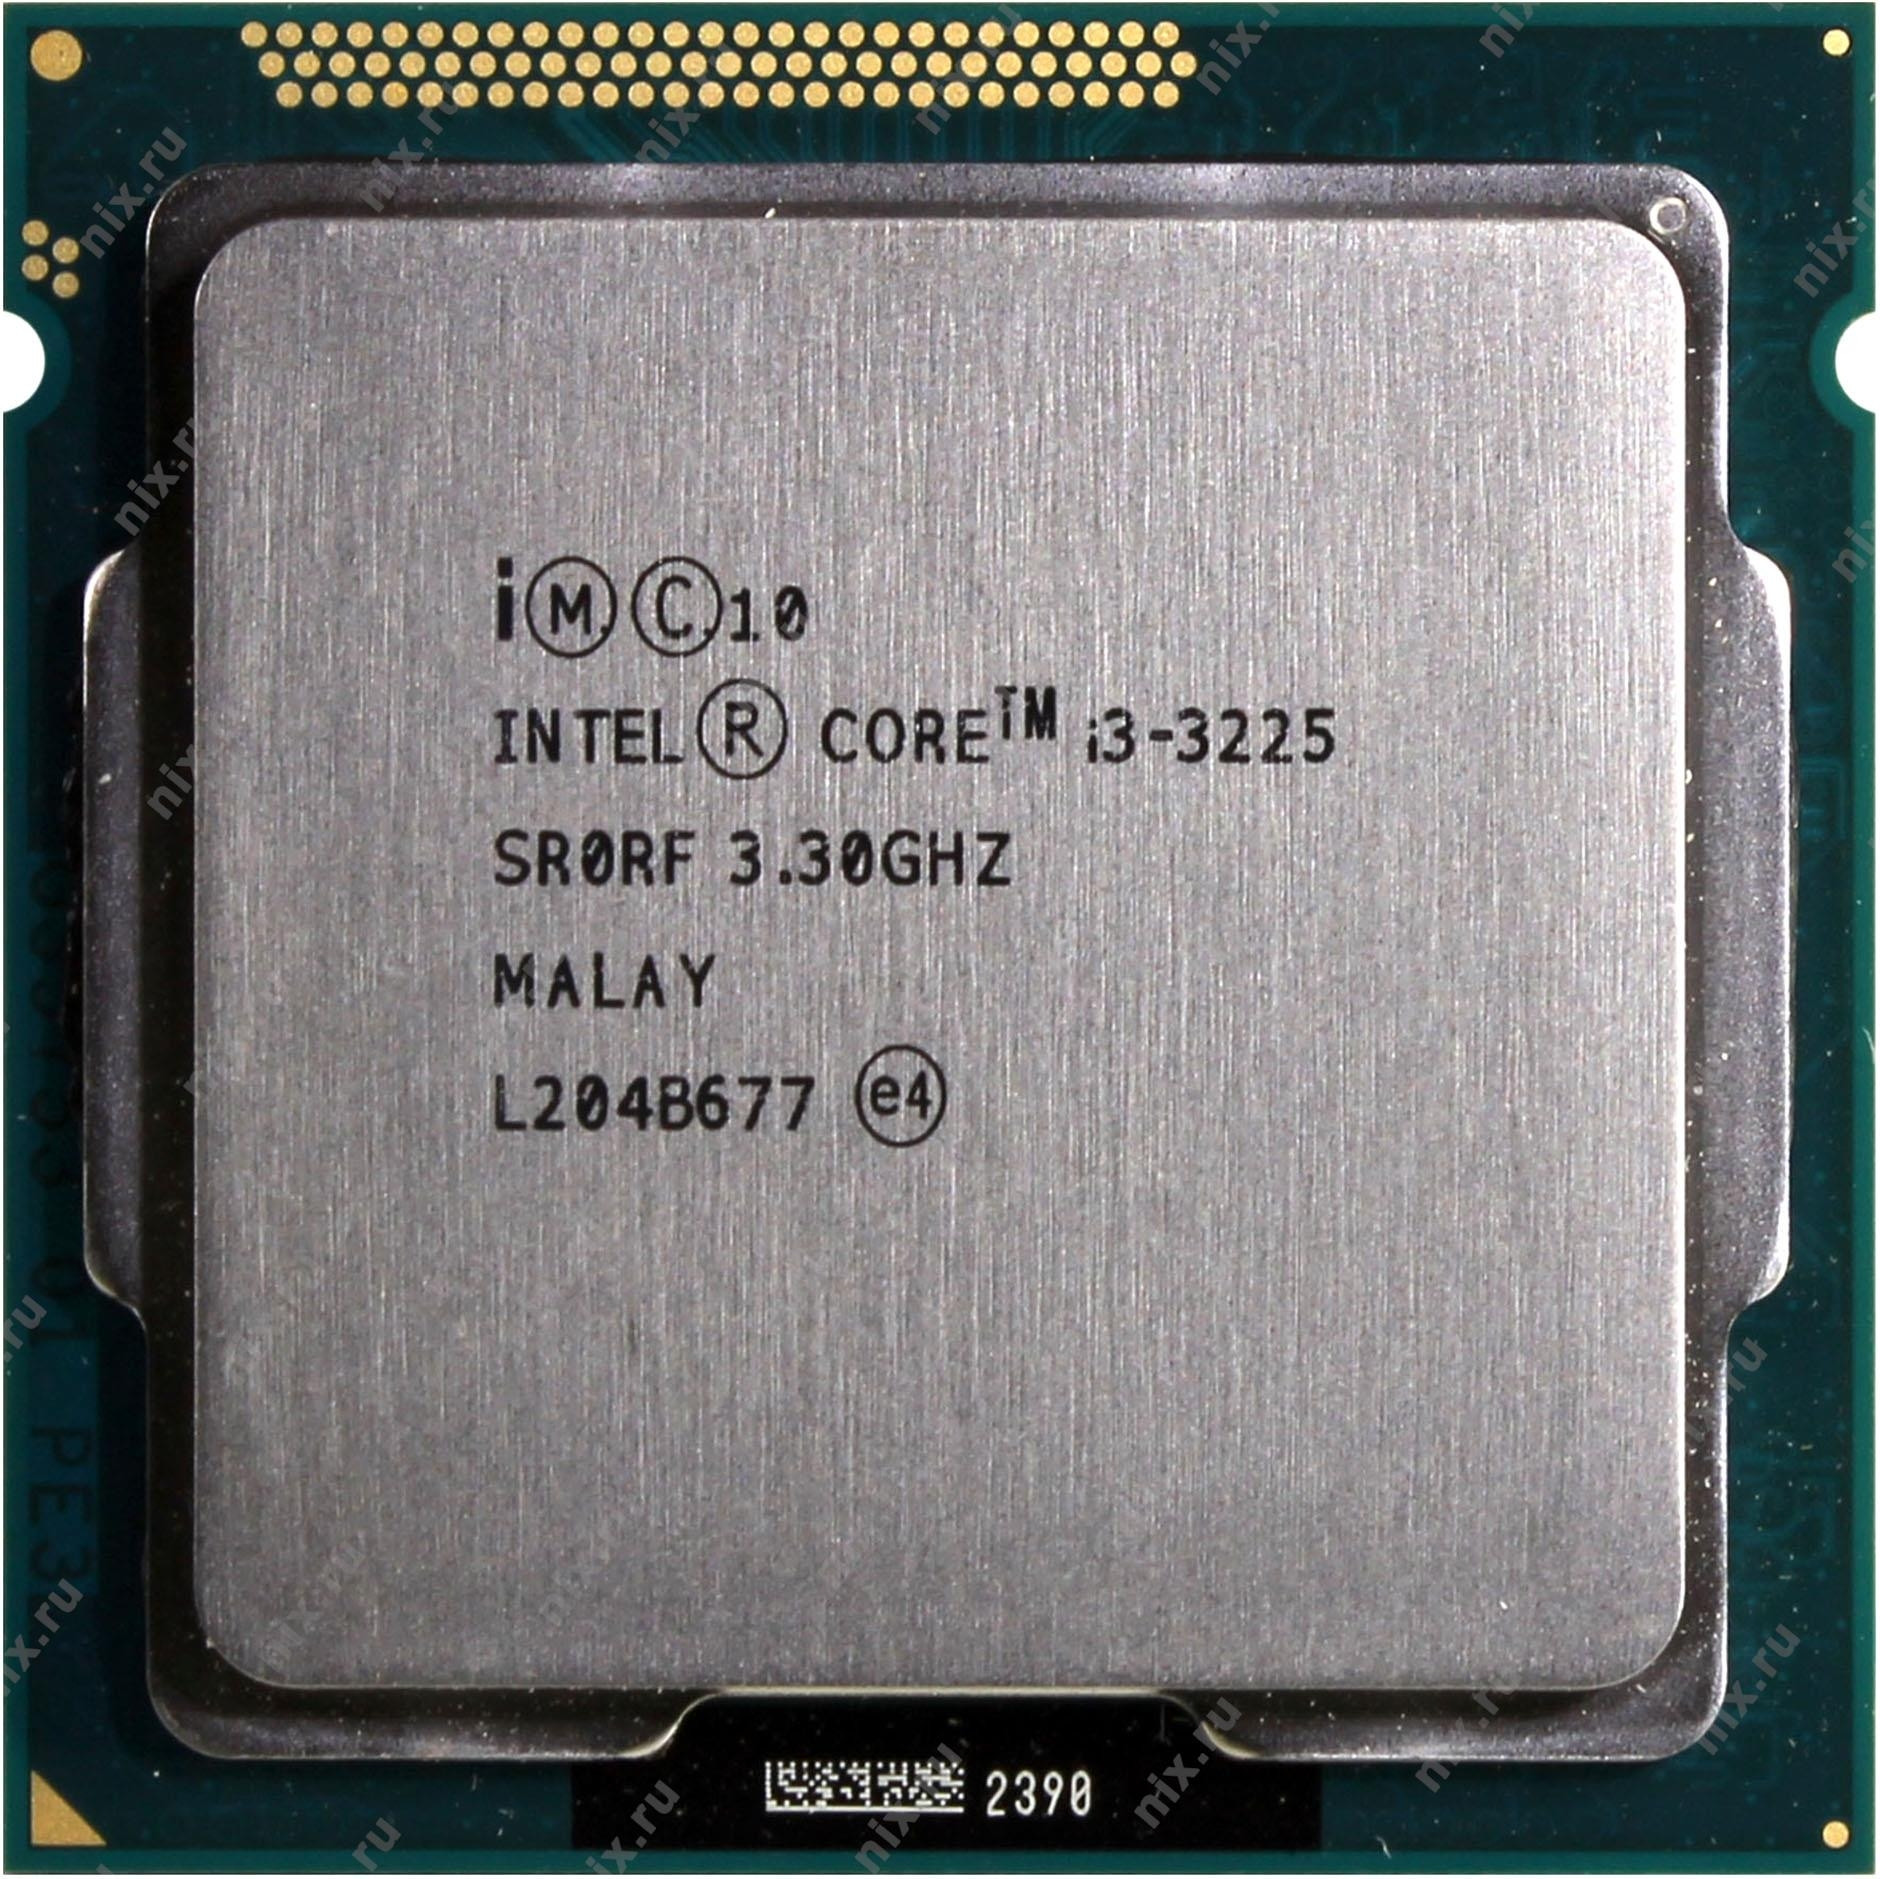 Procesor Intel Core i3-3225 3.30GHz, 3MB Cache, Socket 1155